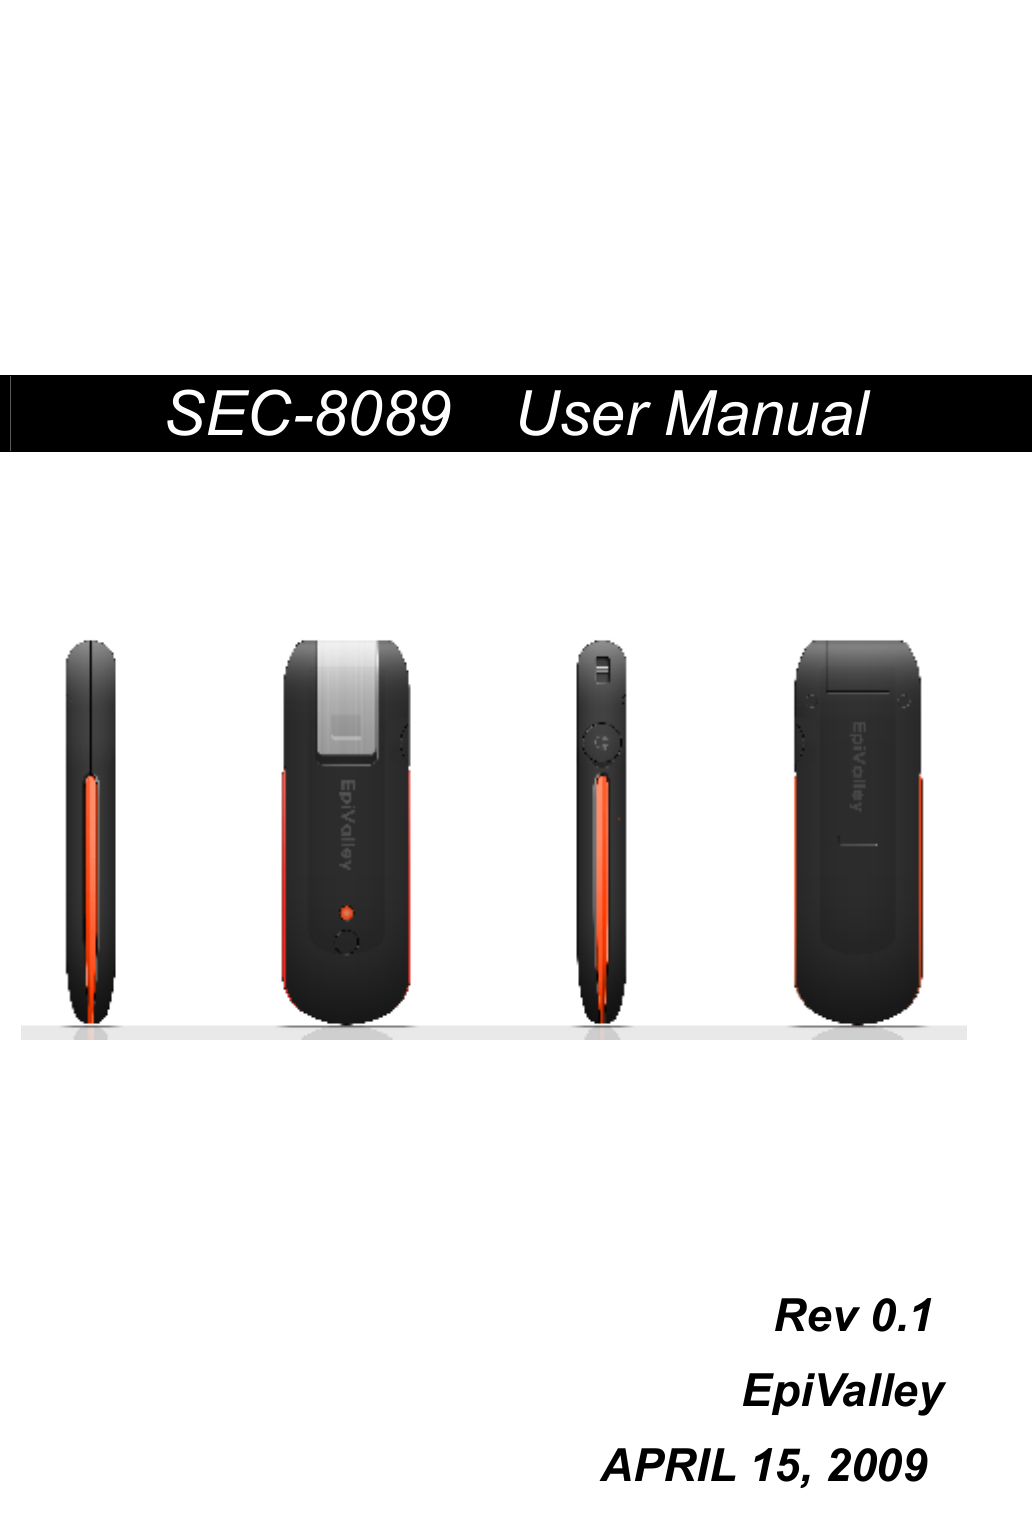                    SEC-8089    User Manual                                                     Rev 0.1                              EpiValley                       APRIL 15, 2009  